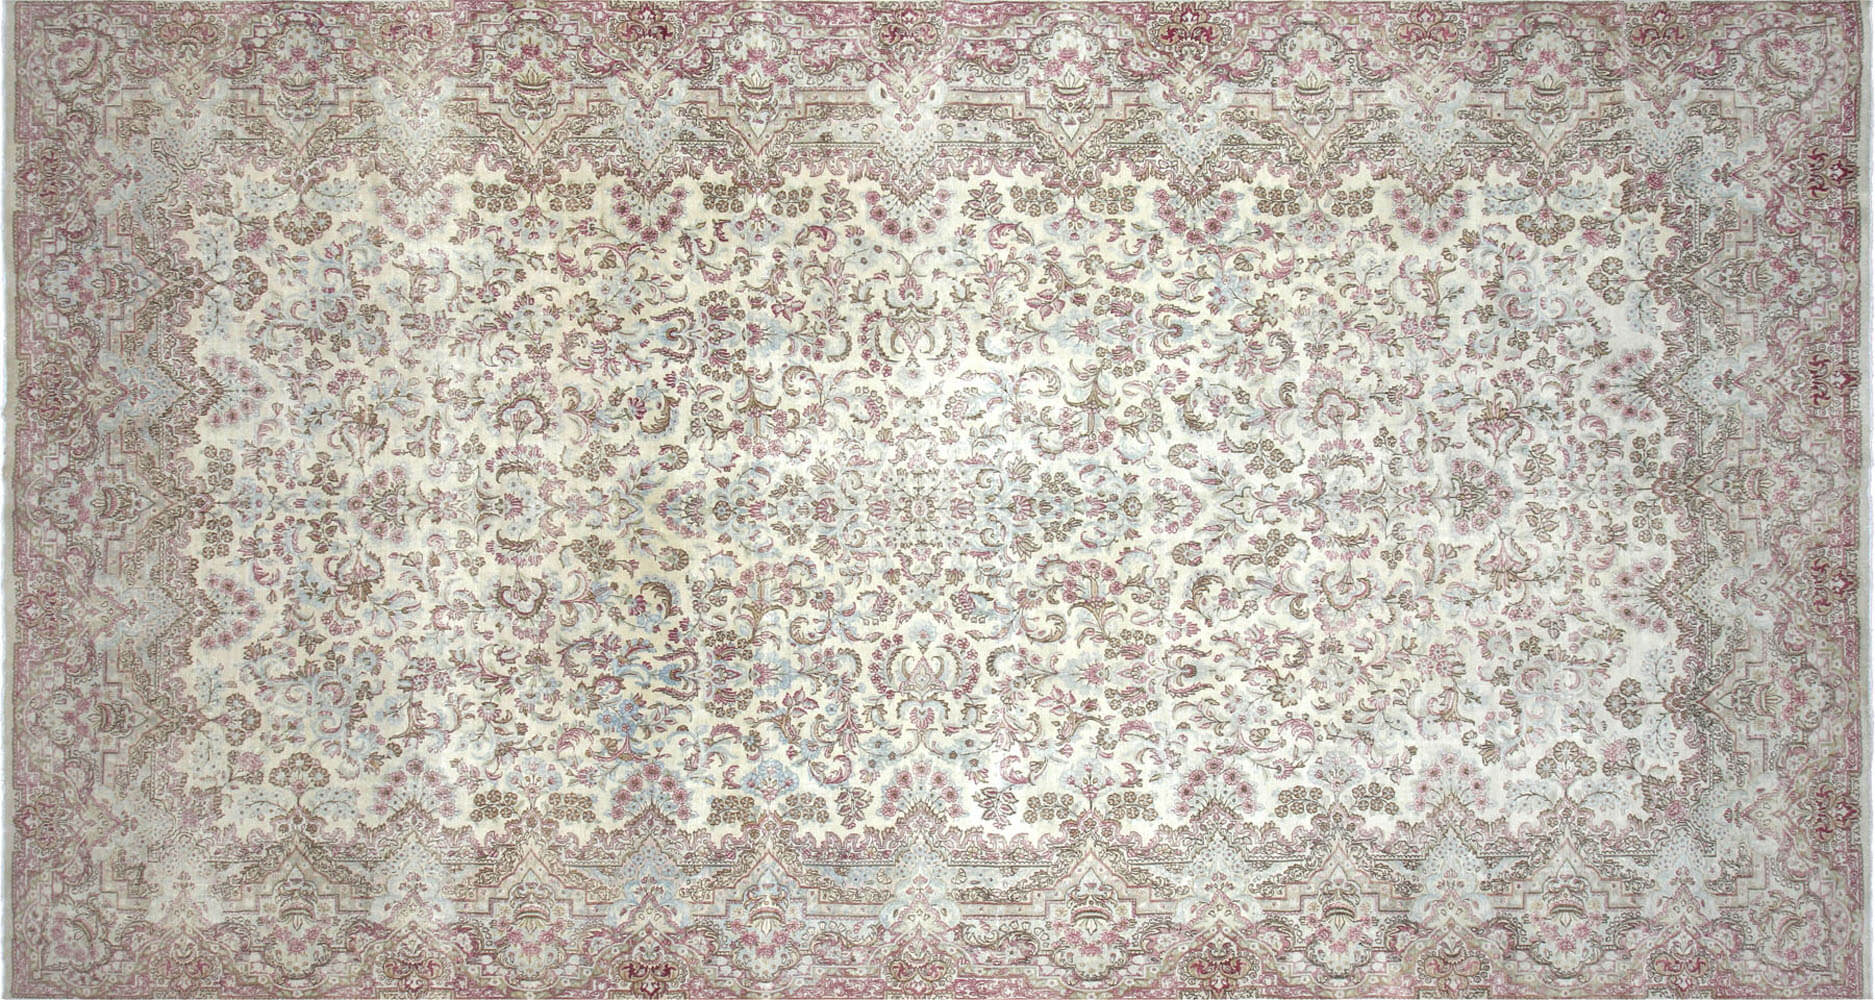 Semi Antique Persian Kerman Carpet - 10'10" x 20'2"